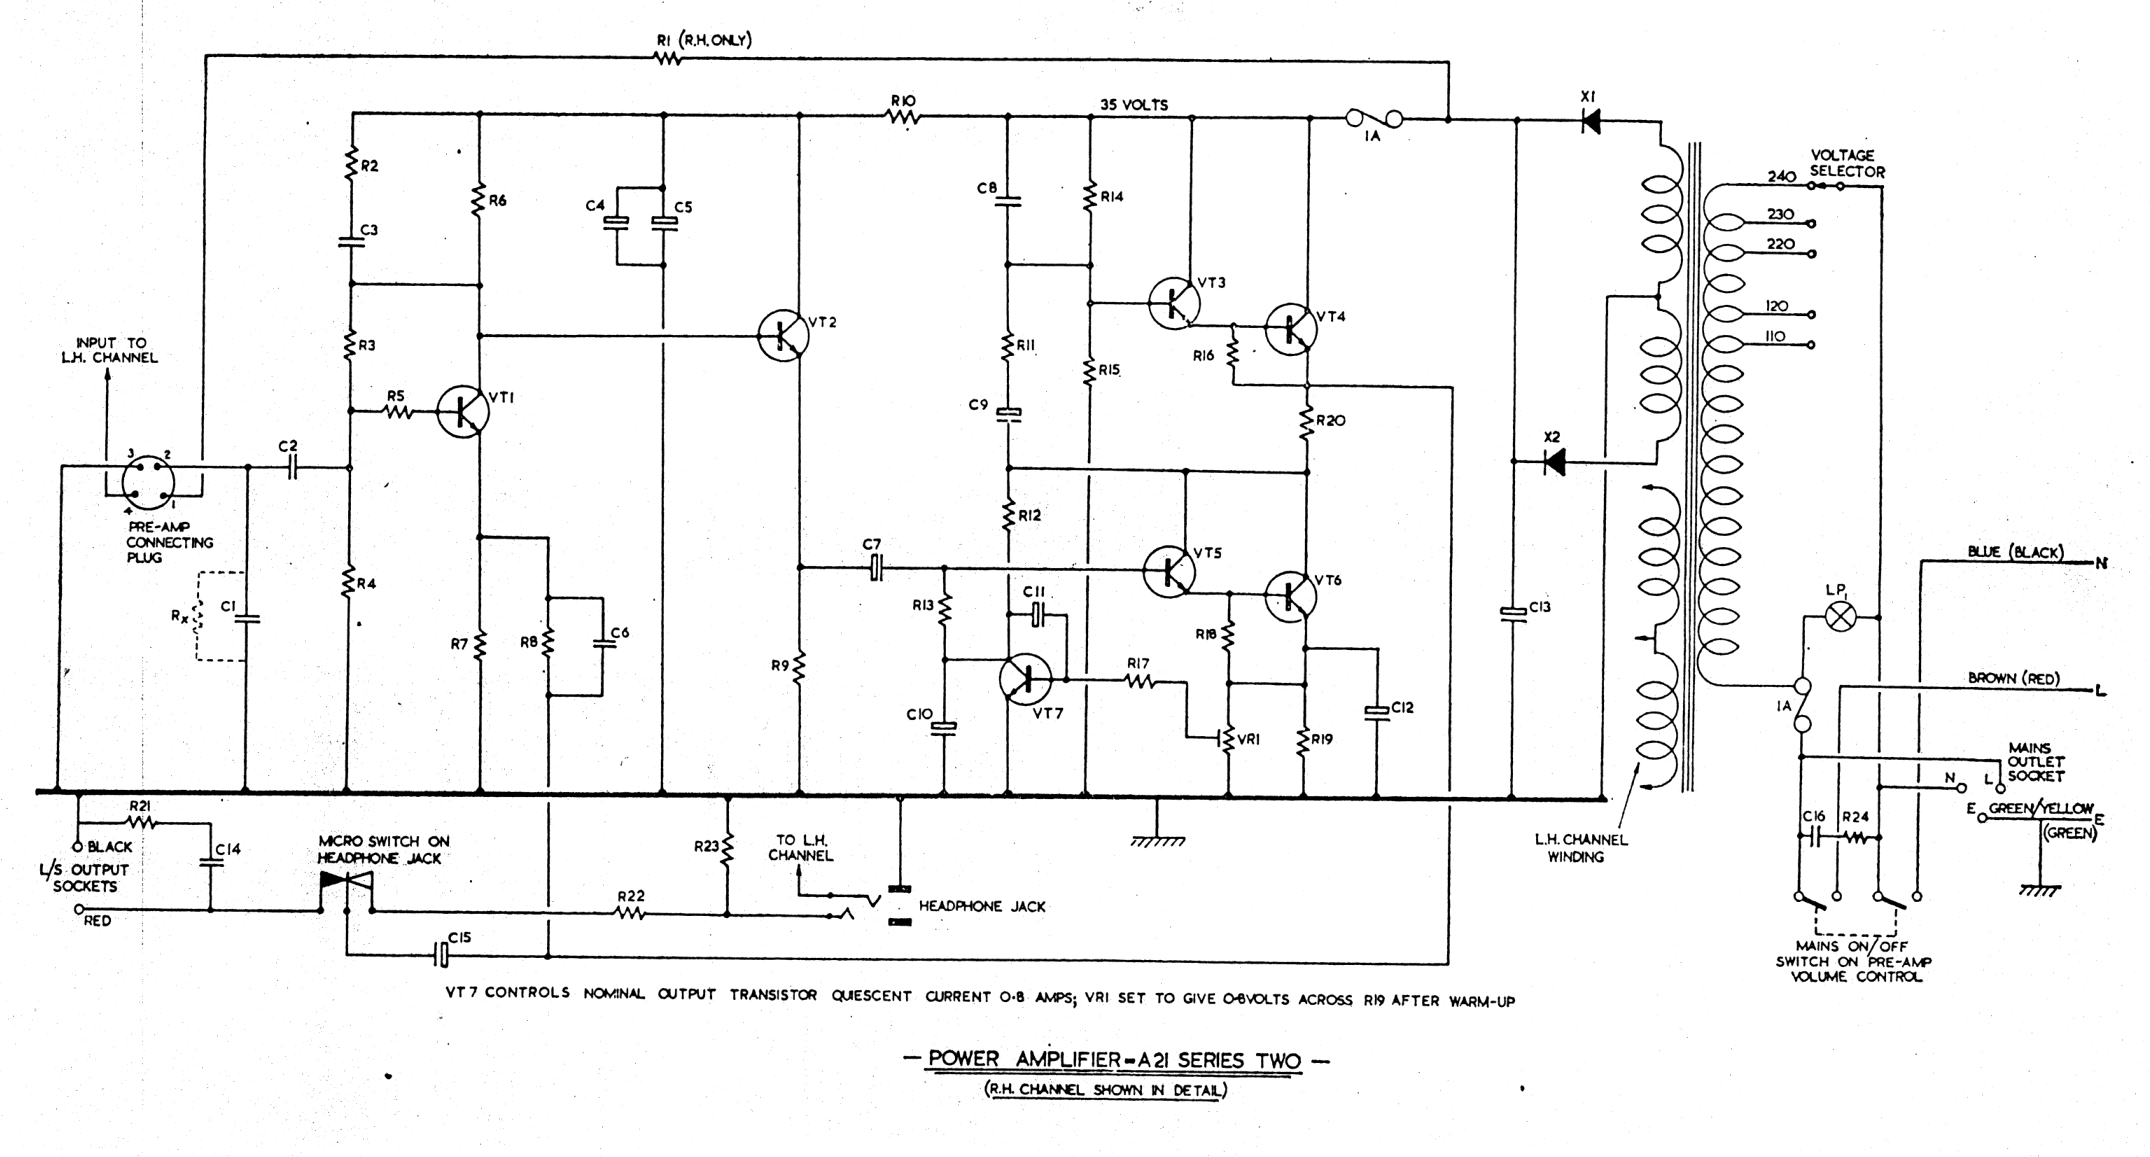 diagram.gif - 141Kb